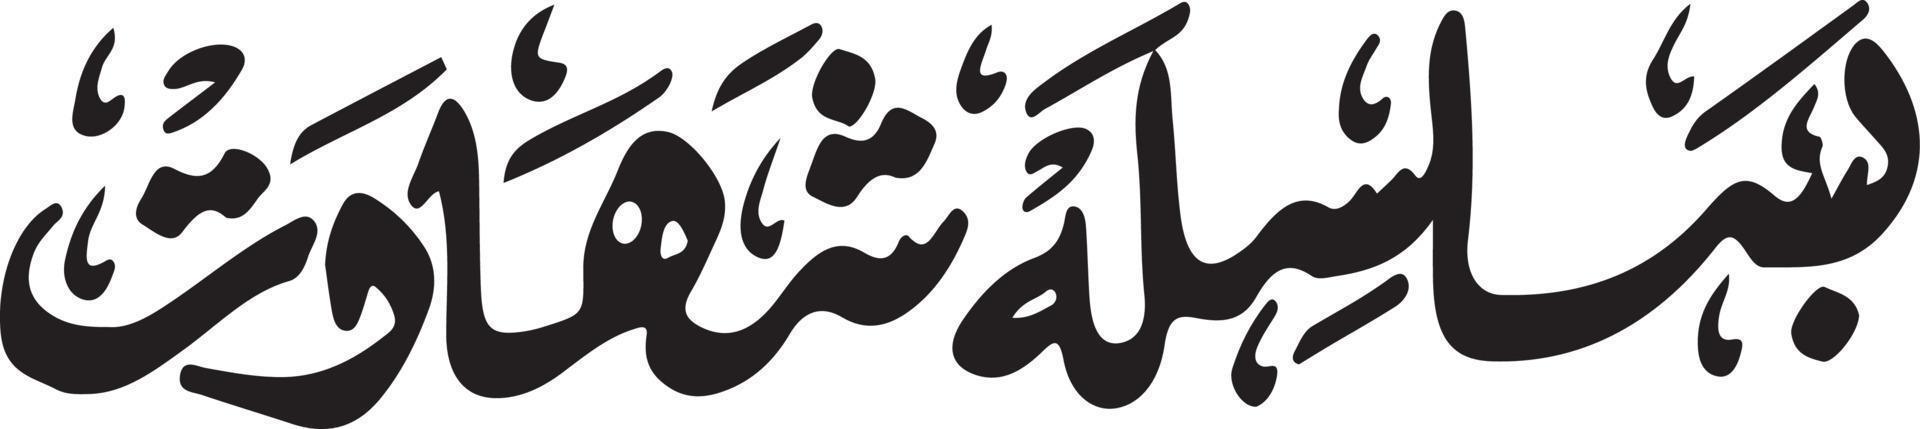 basilsla shadat título islâmica urdu caligrafia árabe vetor livre